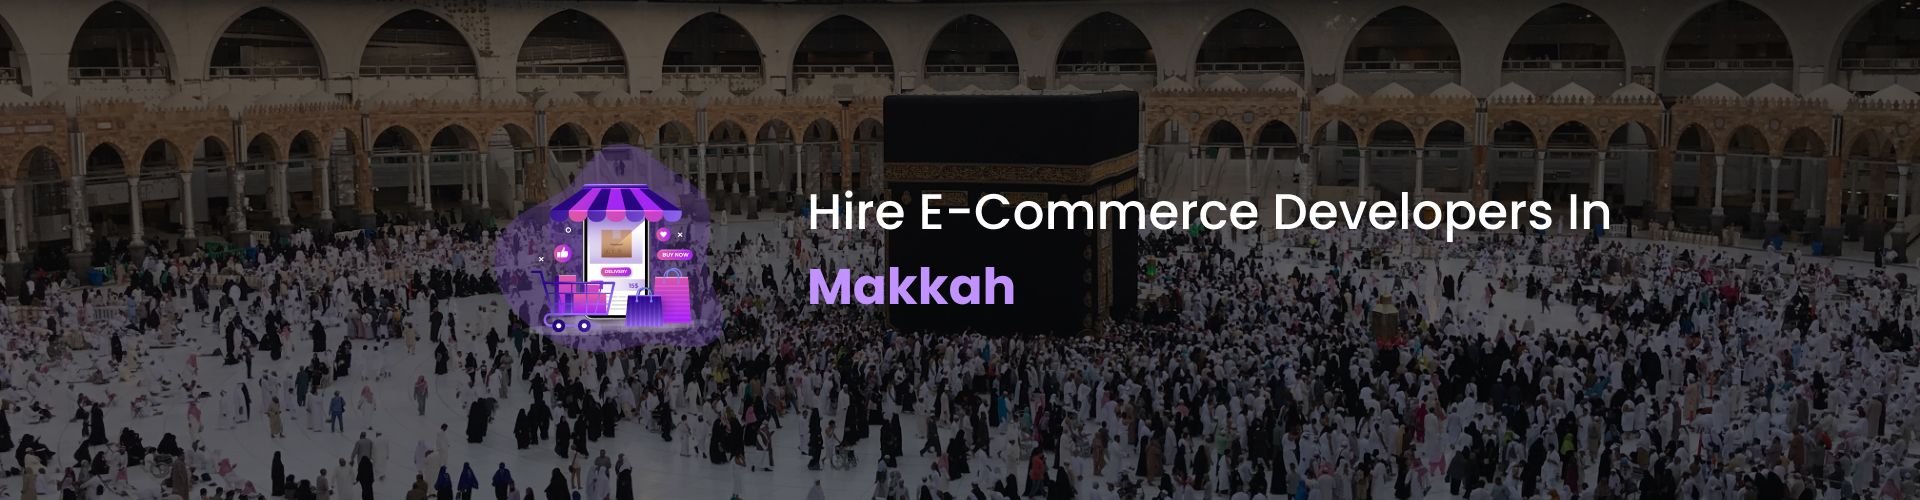 ecommerce developers makkah